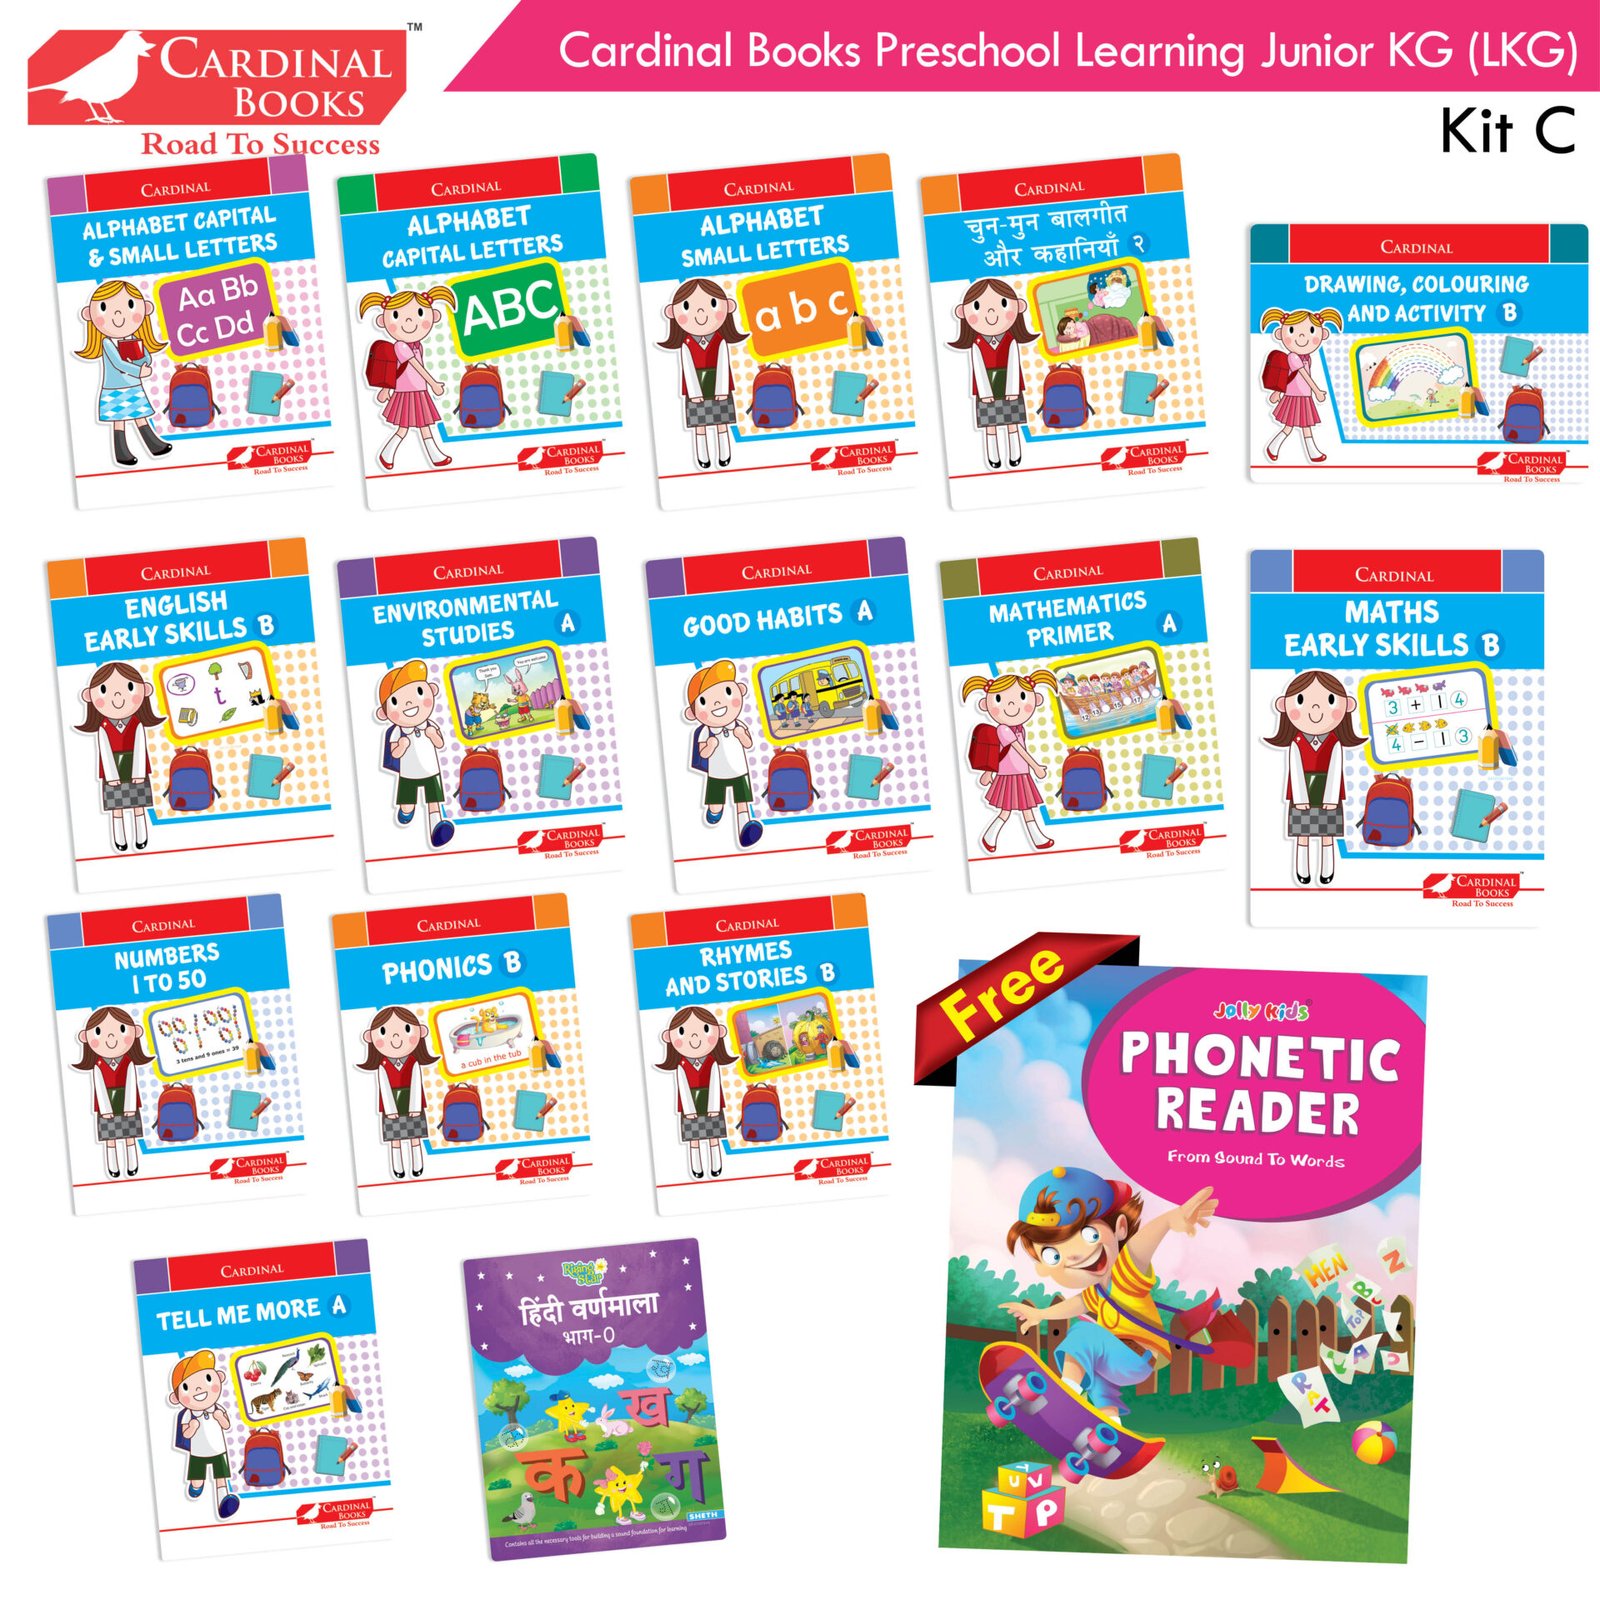 Cardinal Books Preschool Learning Junior KG Kit C1